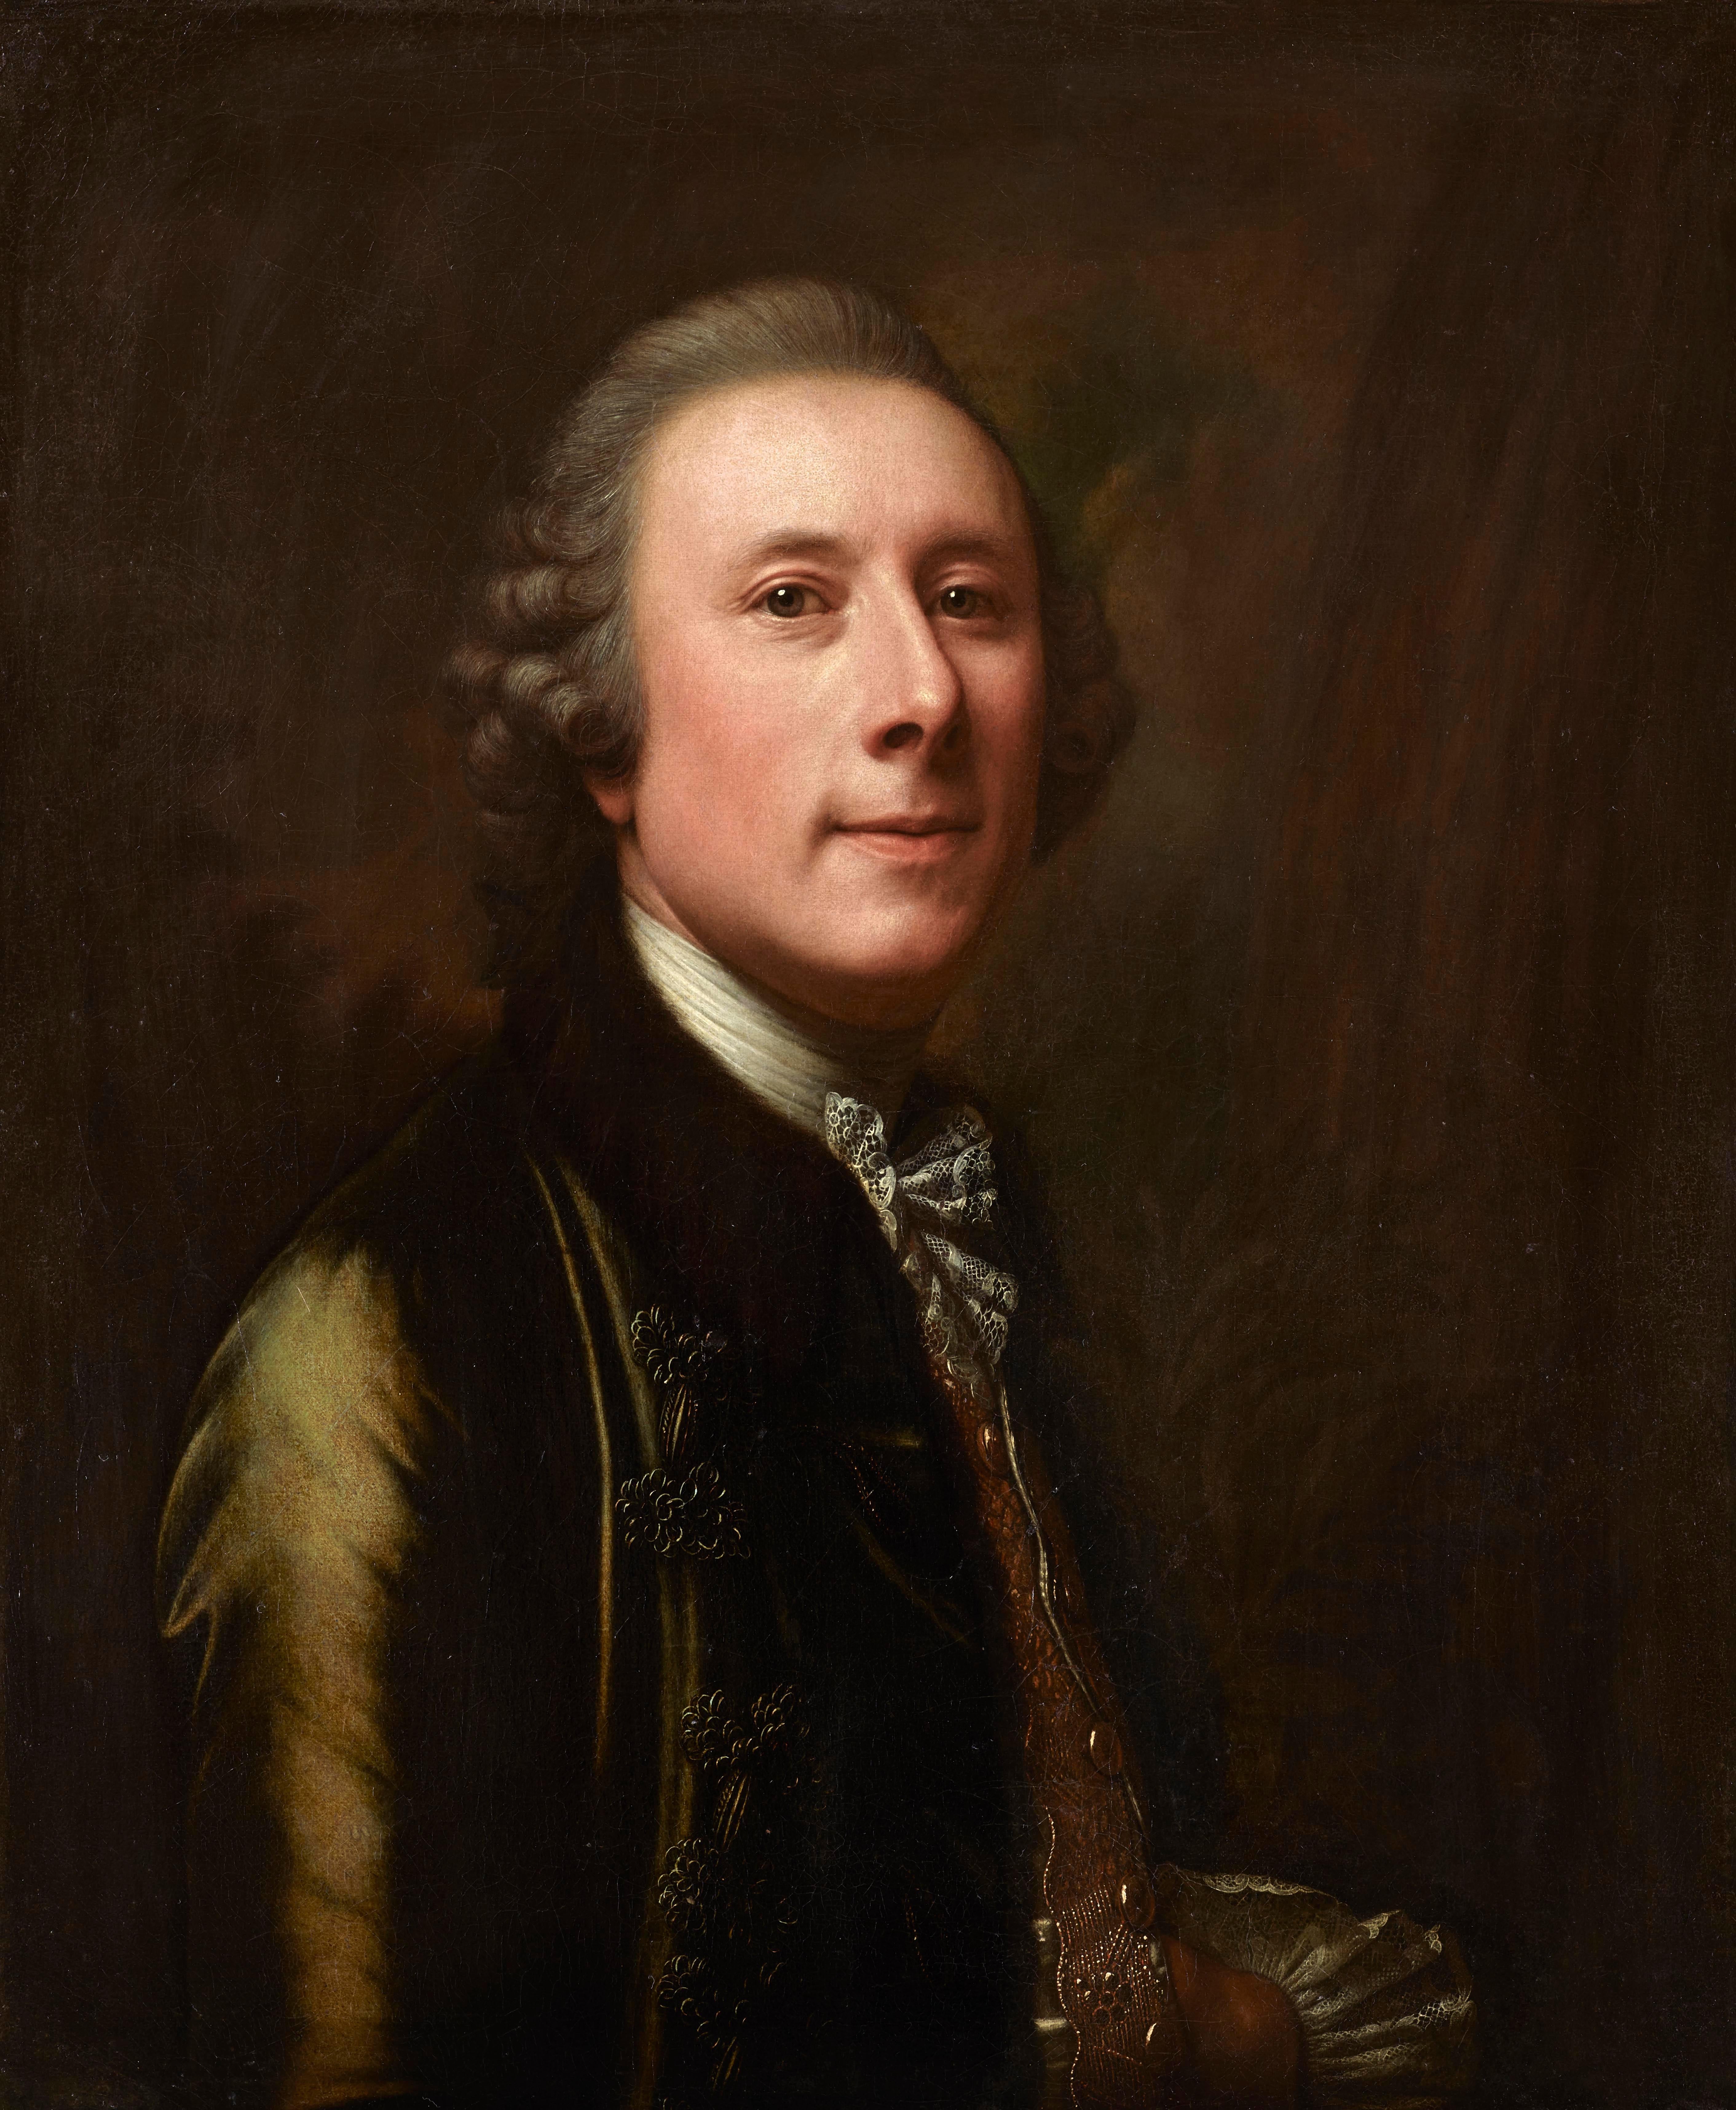 Anton von Maron Portrait Painting - Portrait of a Gentleman, 18th Century Oil Painting